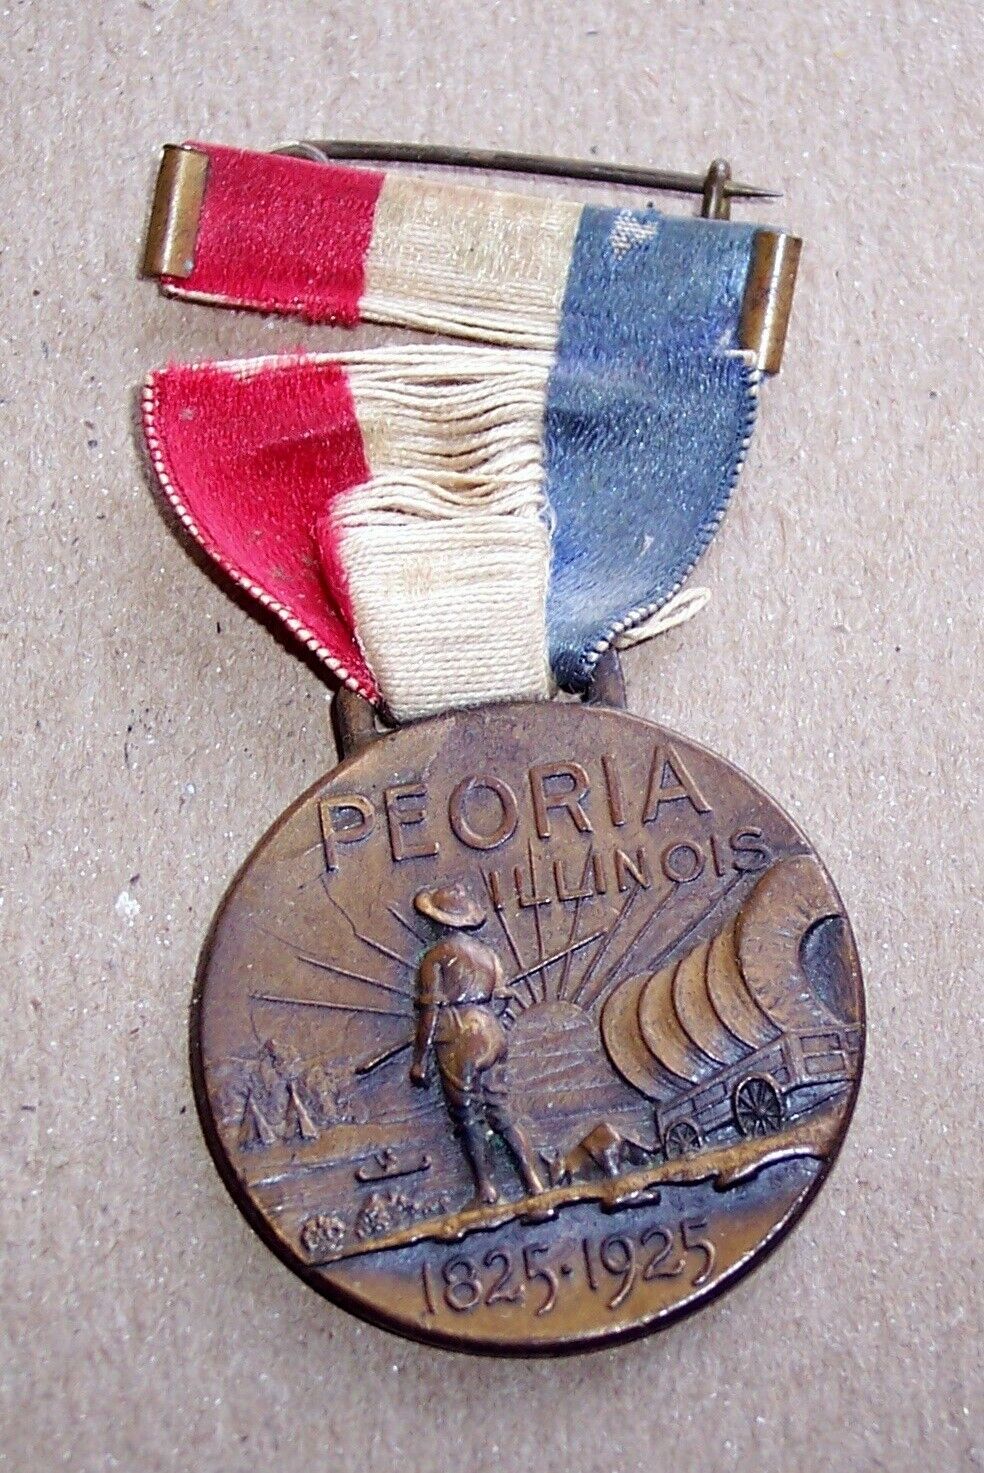 1825-1925 Peoria Illinois Centennial Medal